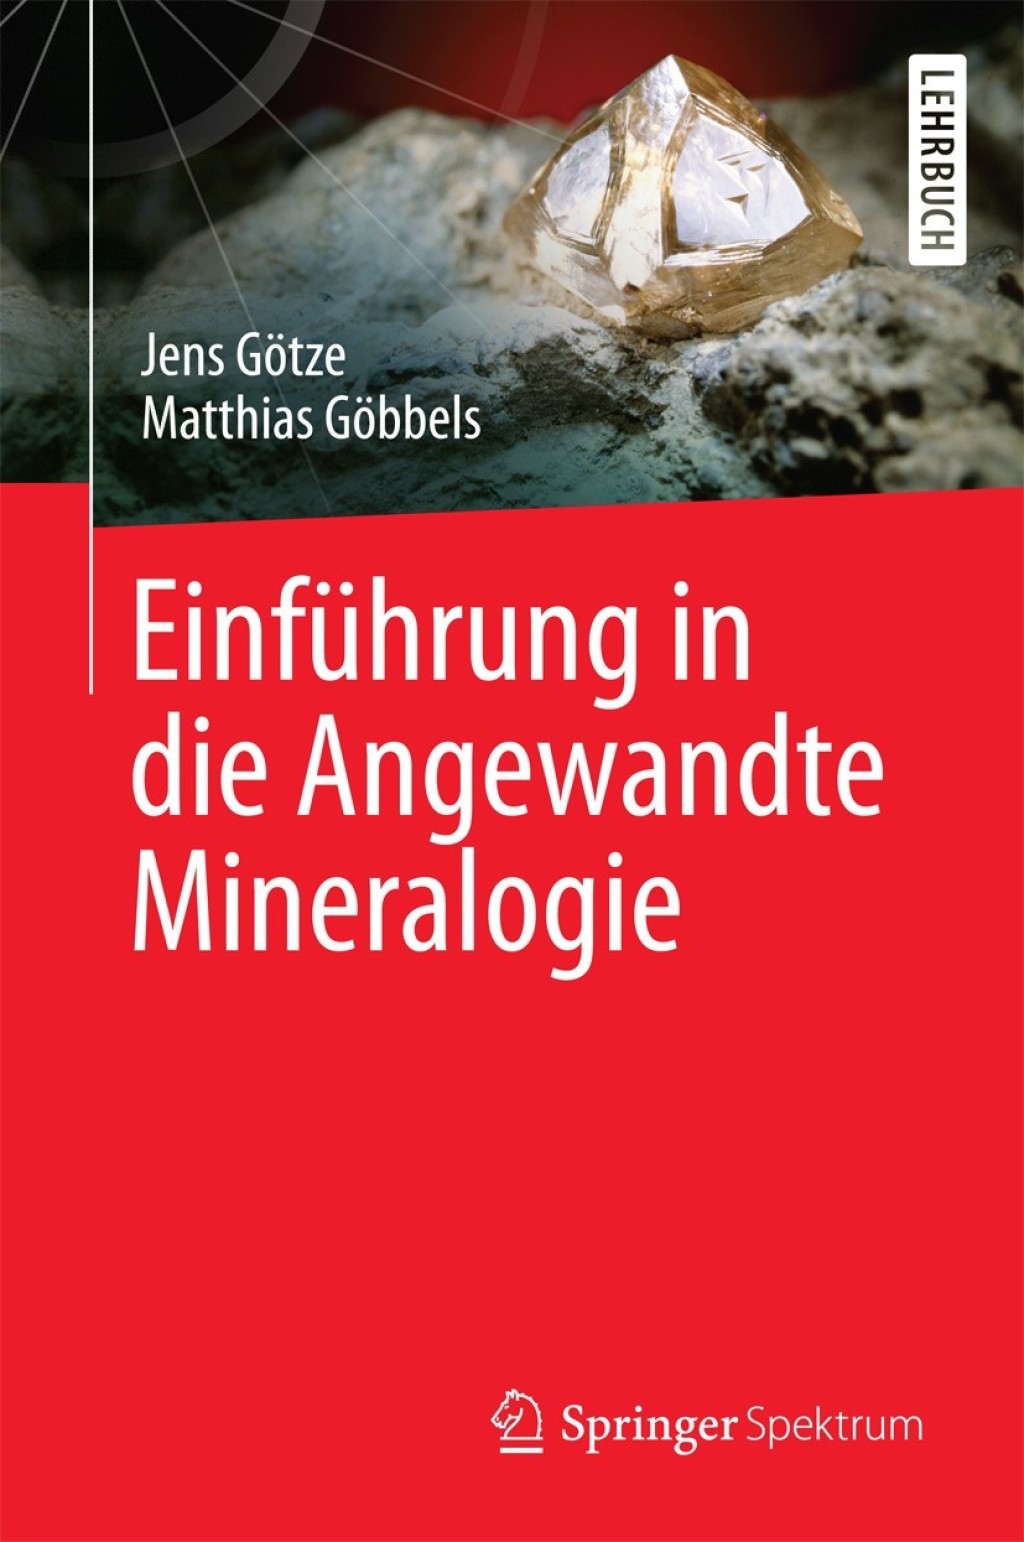 EinfÃ¼hrung in die Angewandte Mineralogie (eBook) - Jens GÃ¶tze; Matthias GÃ¶bbels,